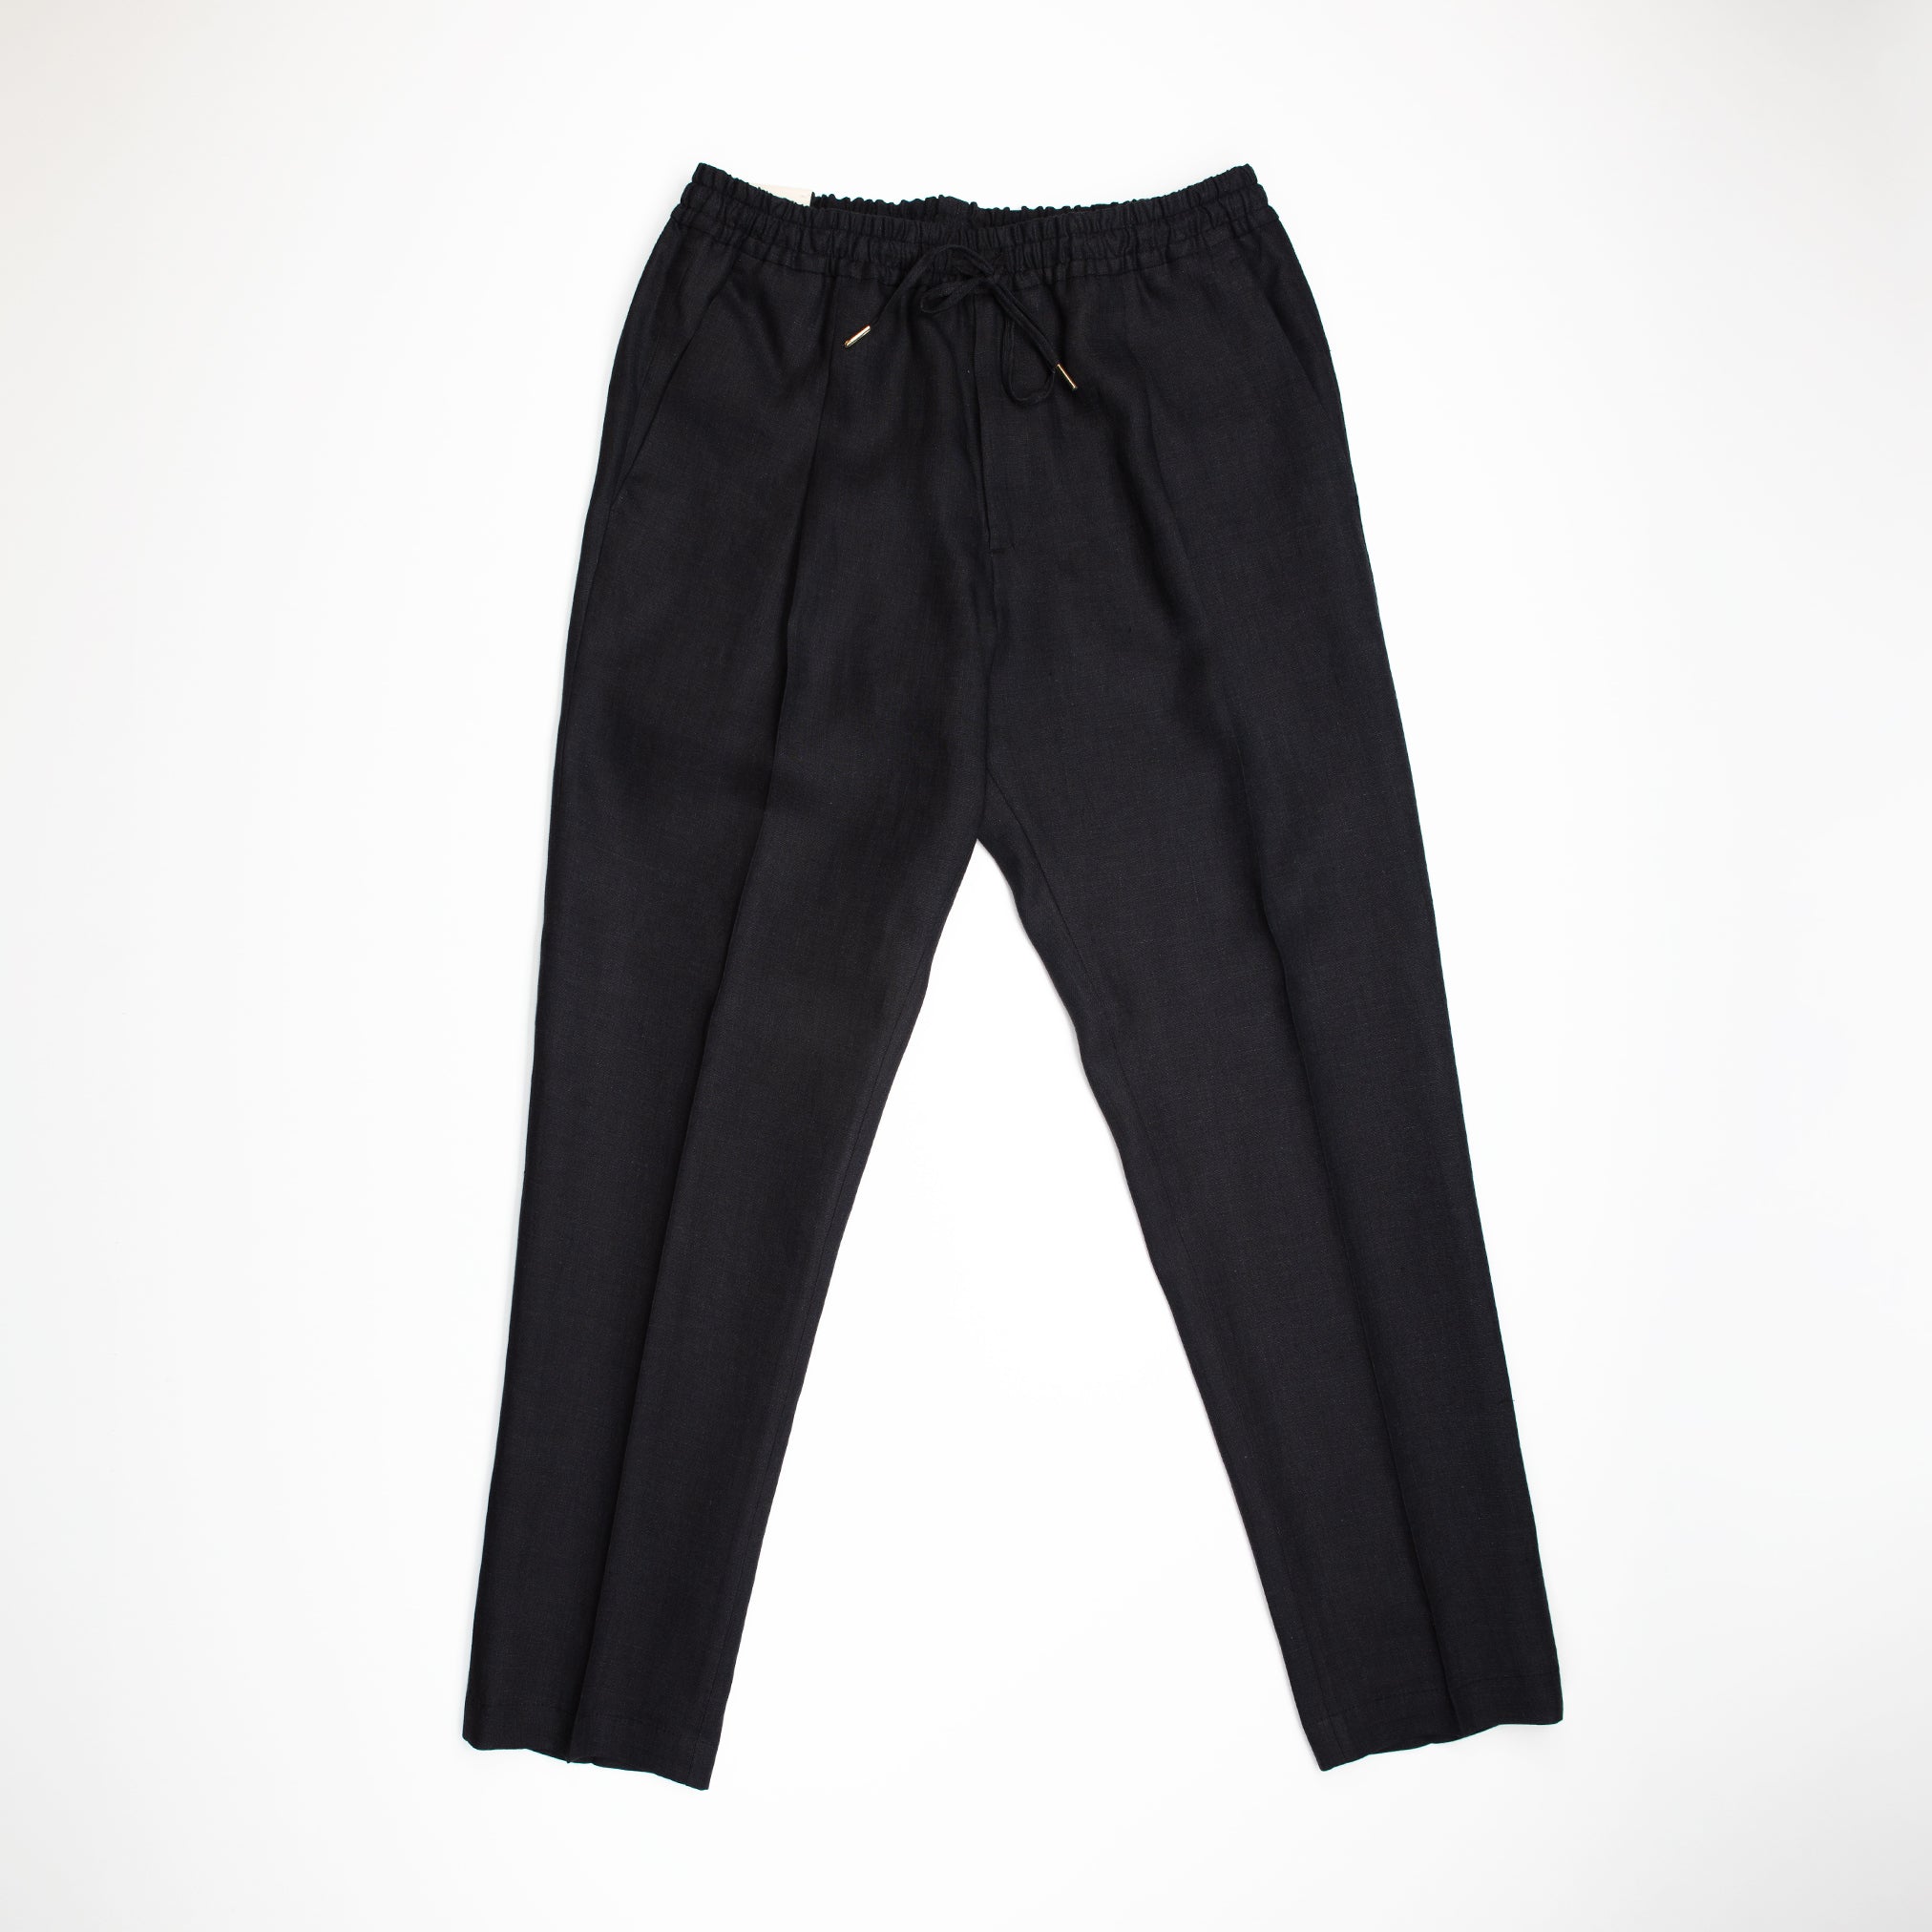 Wimbledon Pants in Black Linen